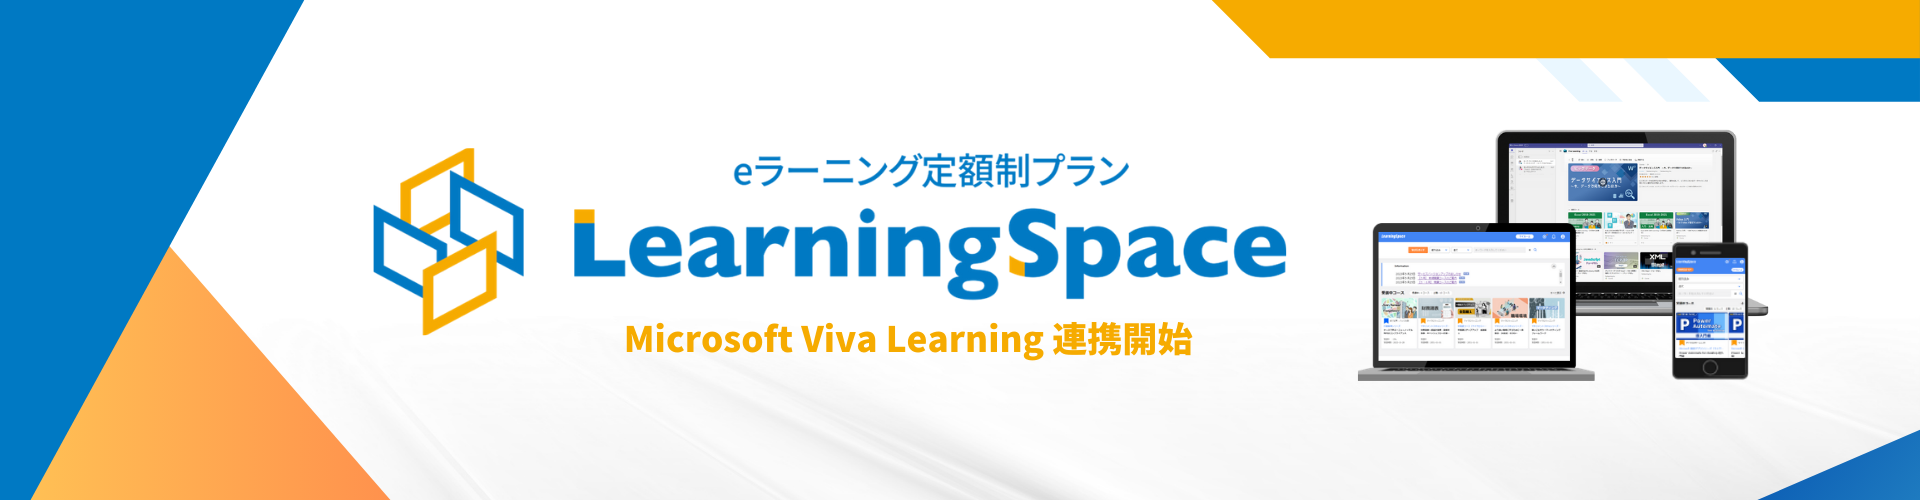 eラーニング定額制プラン LearningSpace Microsoft Viva Learning連携開始